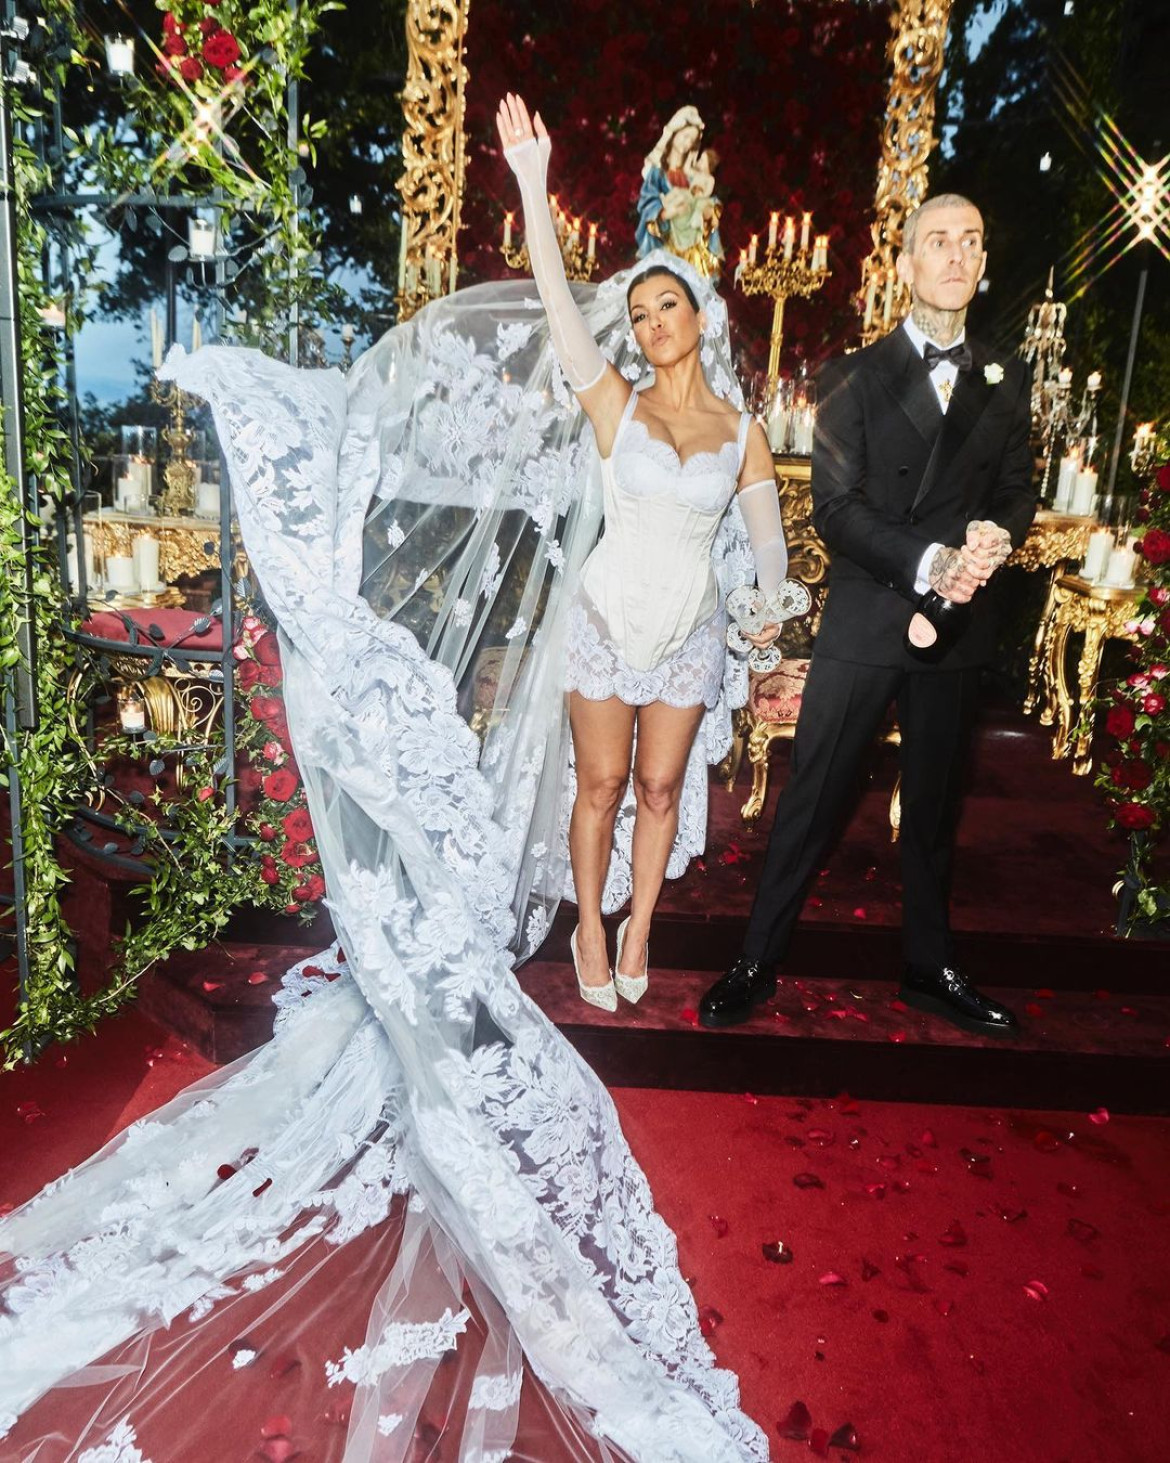 El casamiento de Kourtney Kardashian y Travis Barker. Foto: Instagram @kourtneykardashian.